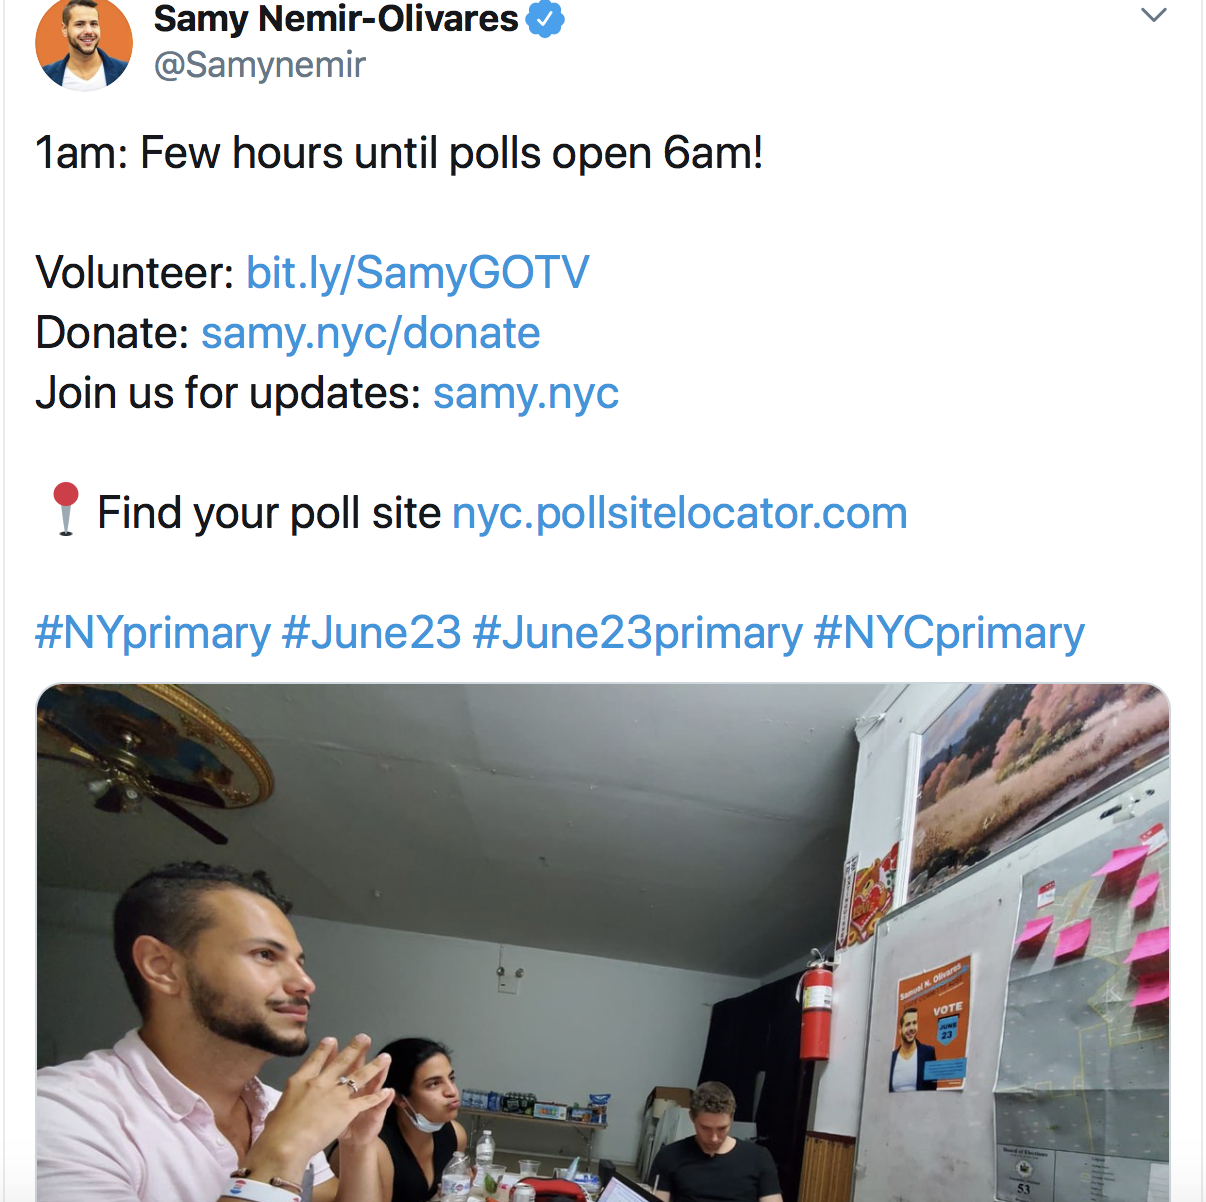 Samy Nemir-Olivares tweets on Election Day